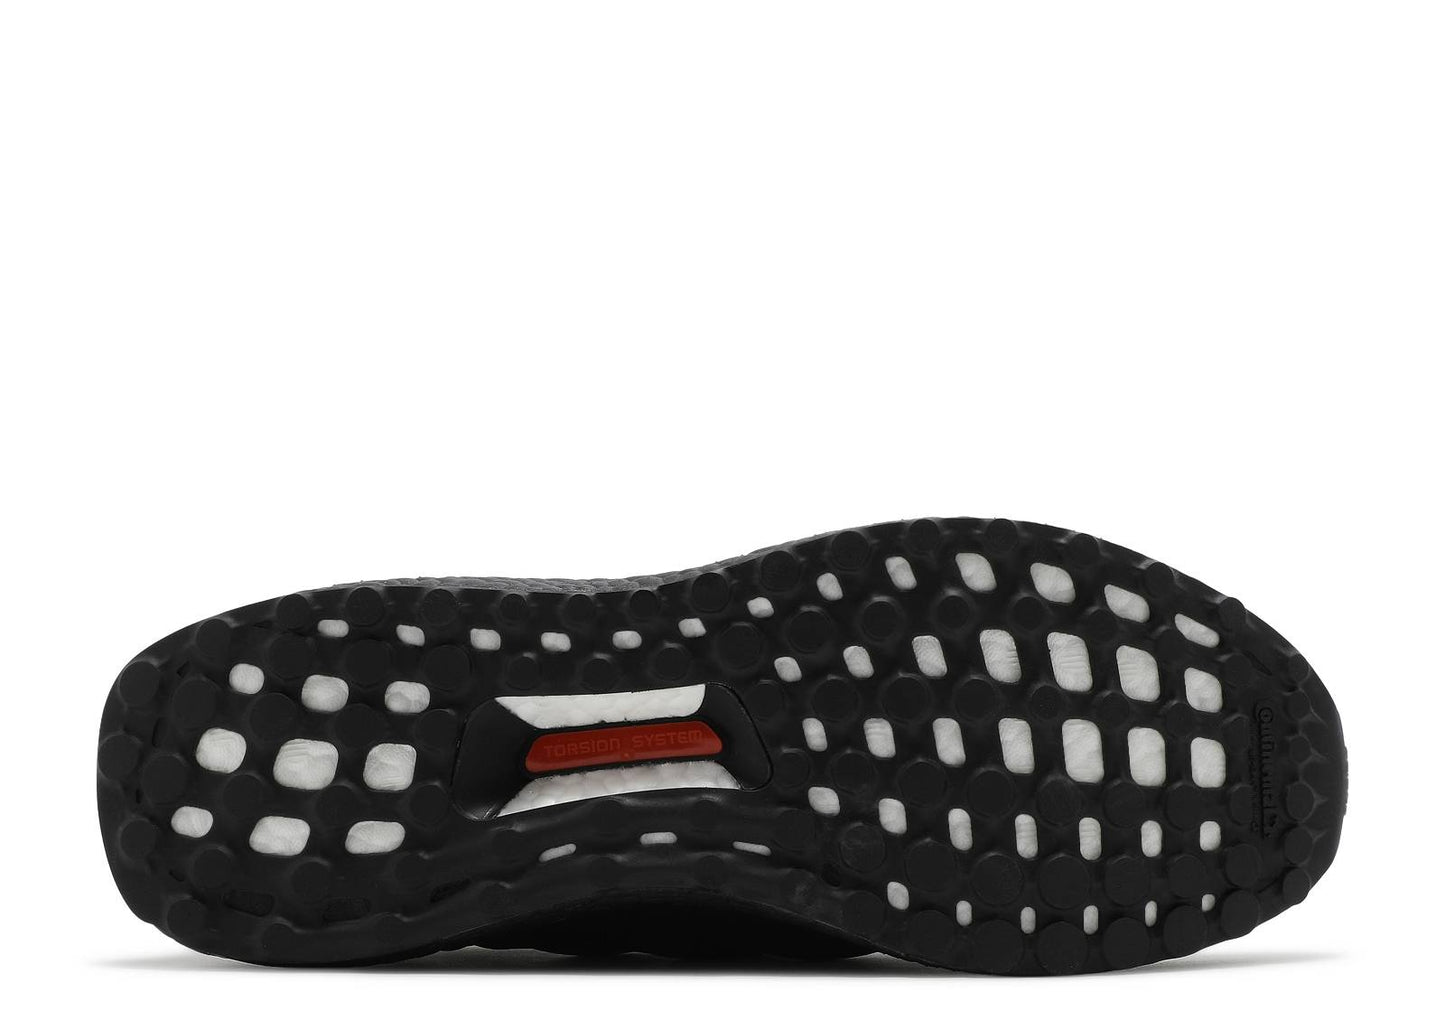 Adidas Ultra Boost 4.0 DNA "Core Black"